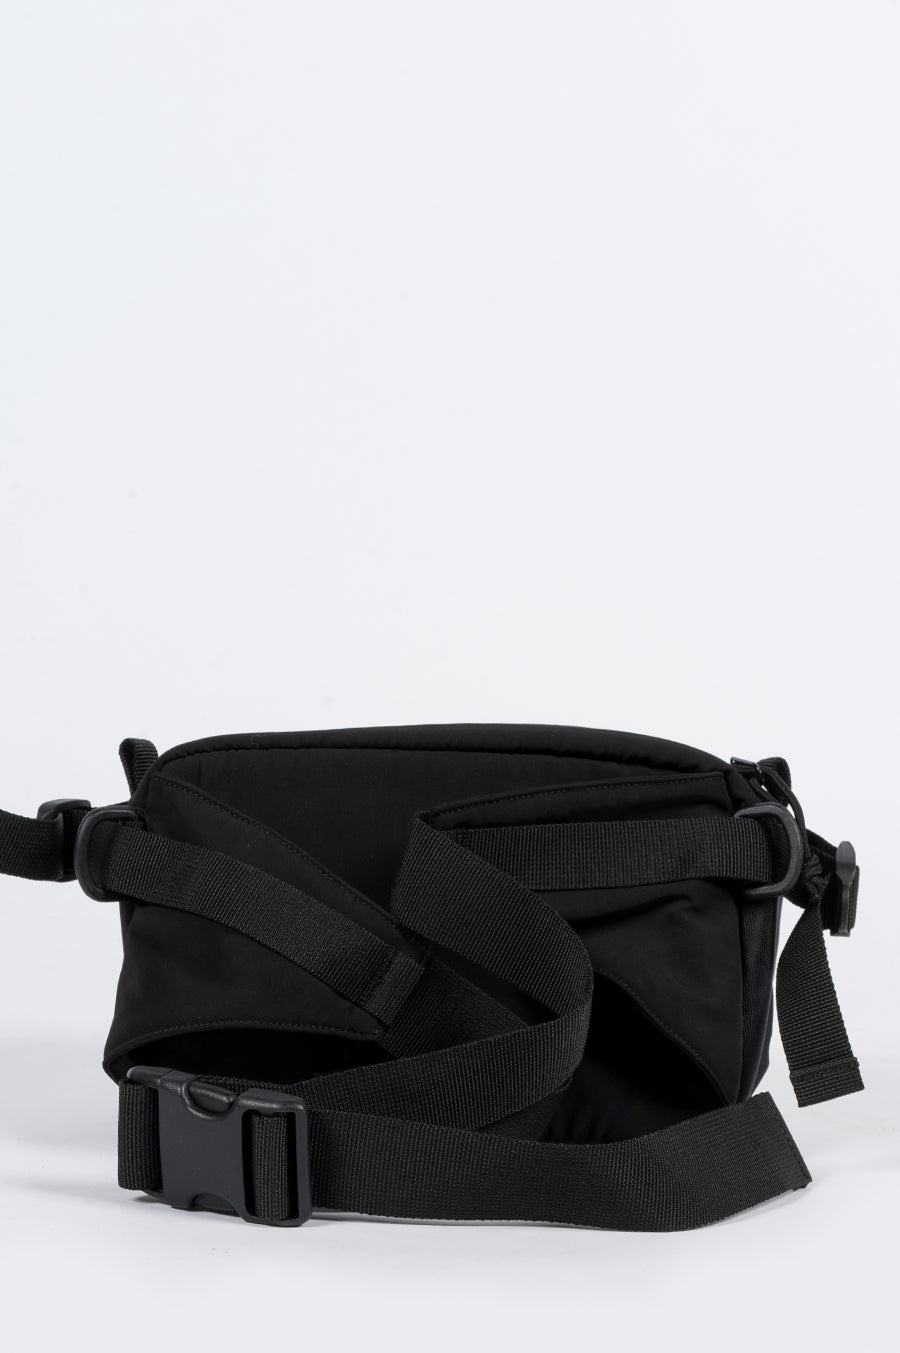 Carhartt WIP Military Hip Bag - Adventure/Black